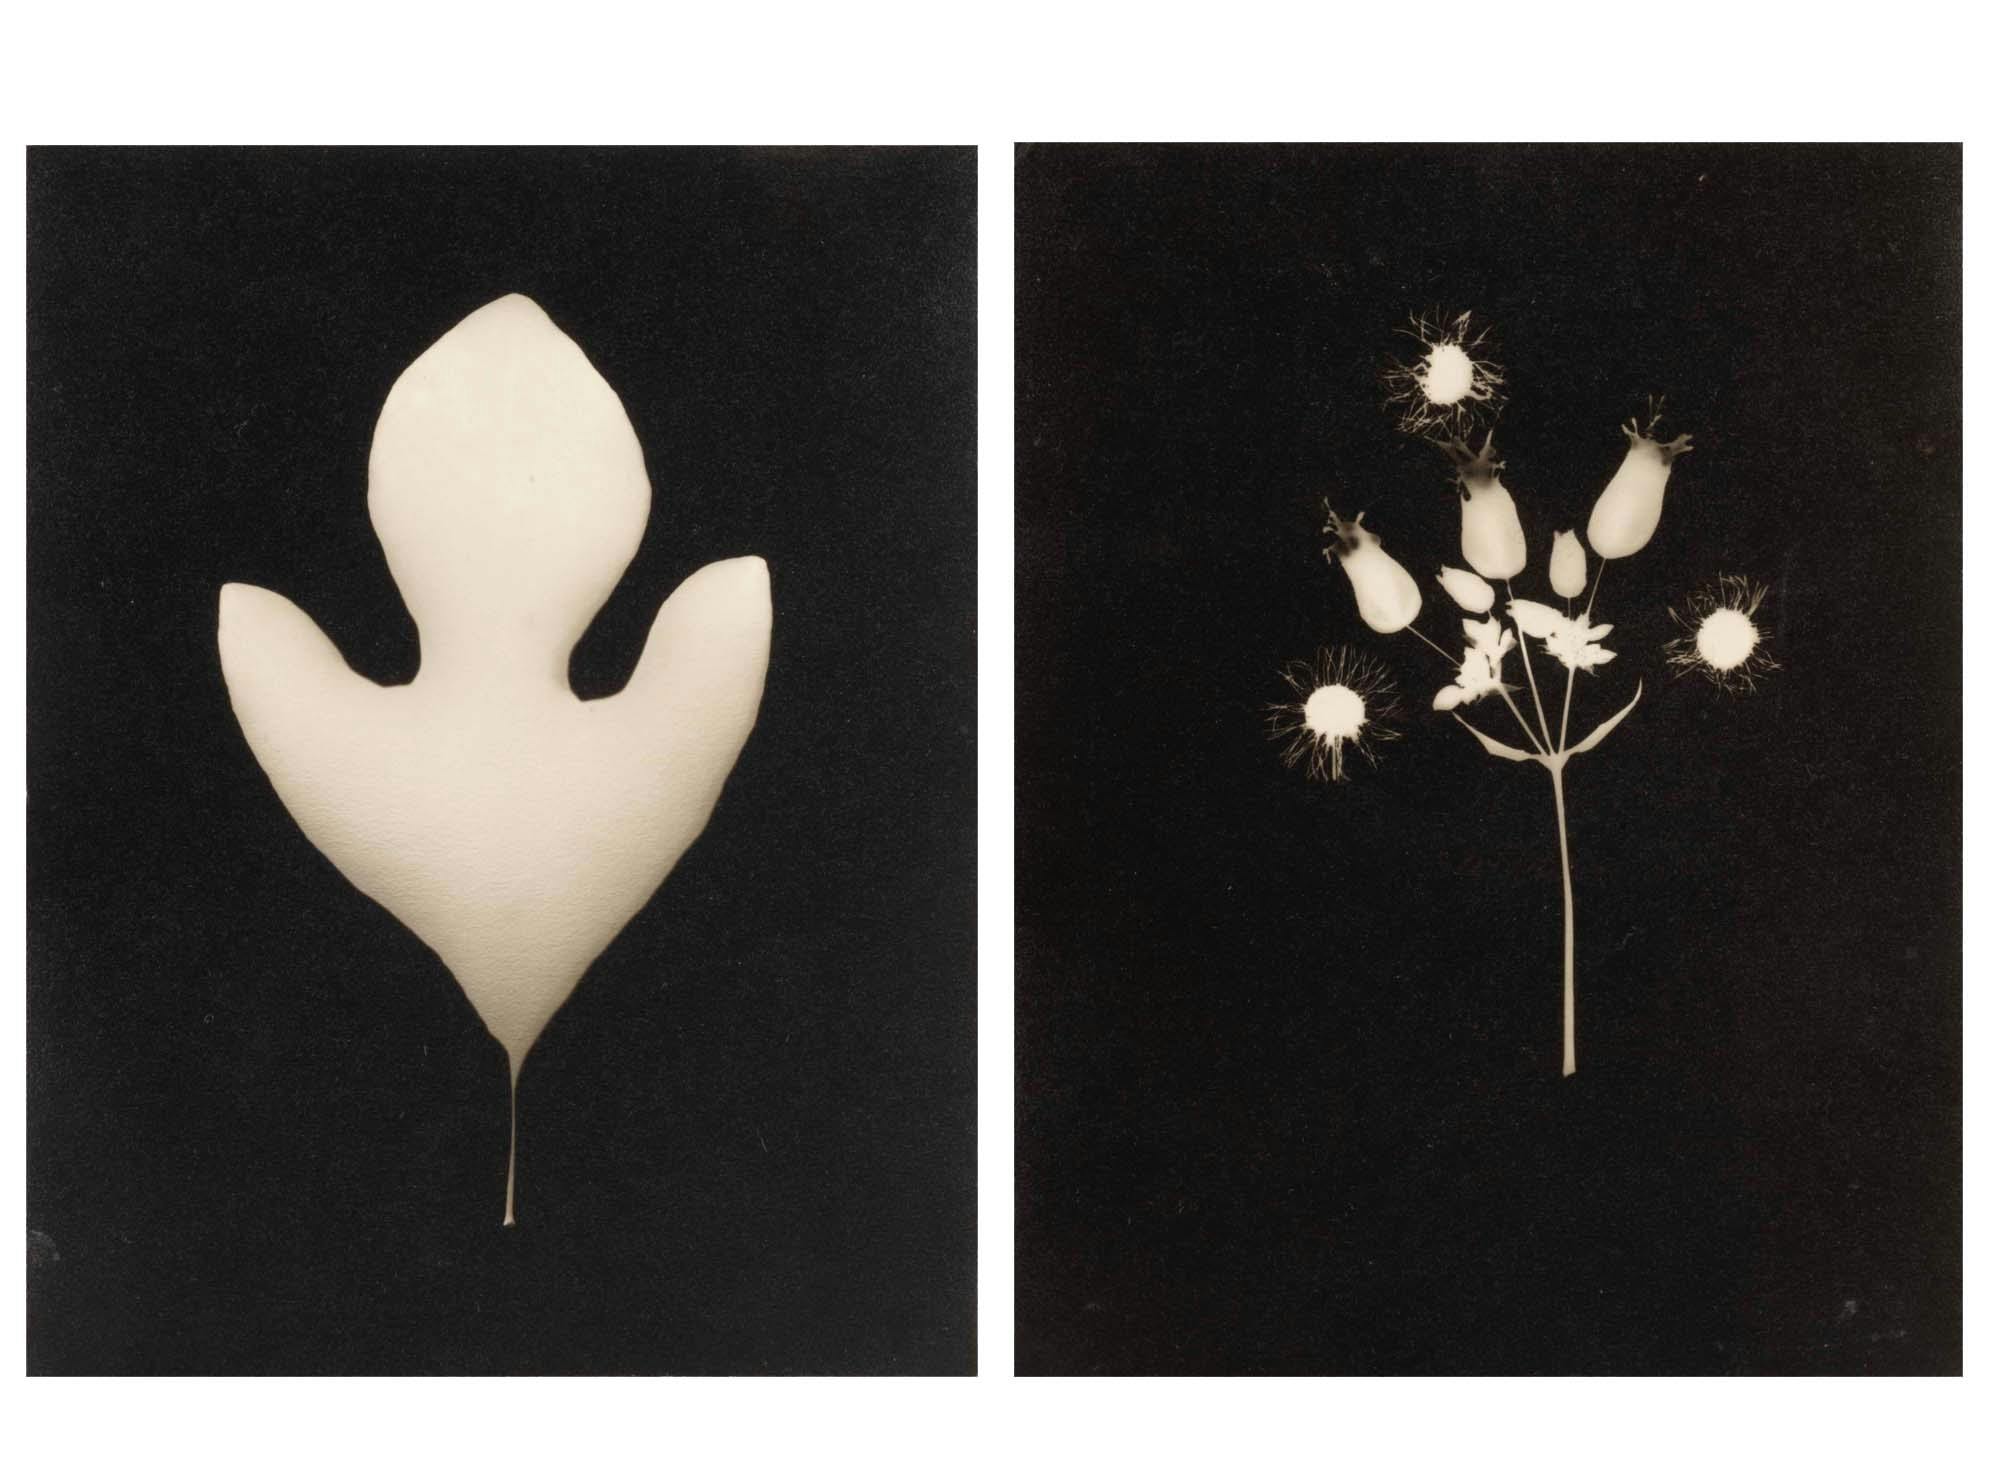 Nature Studies
 1930s
 Photograms
 5 1/2 x 4 1/4 in. (14 x 10.8 cm) each
 – The Richard Pousette-Dart Foundation